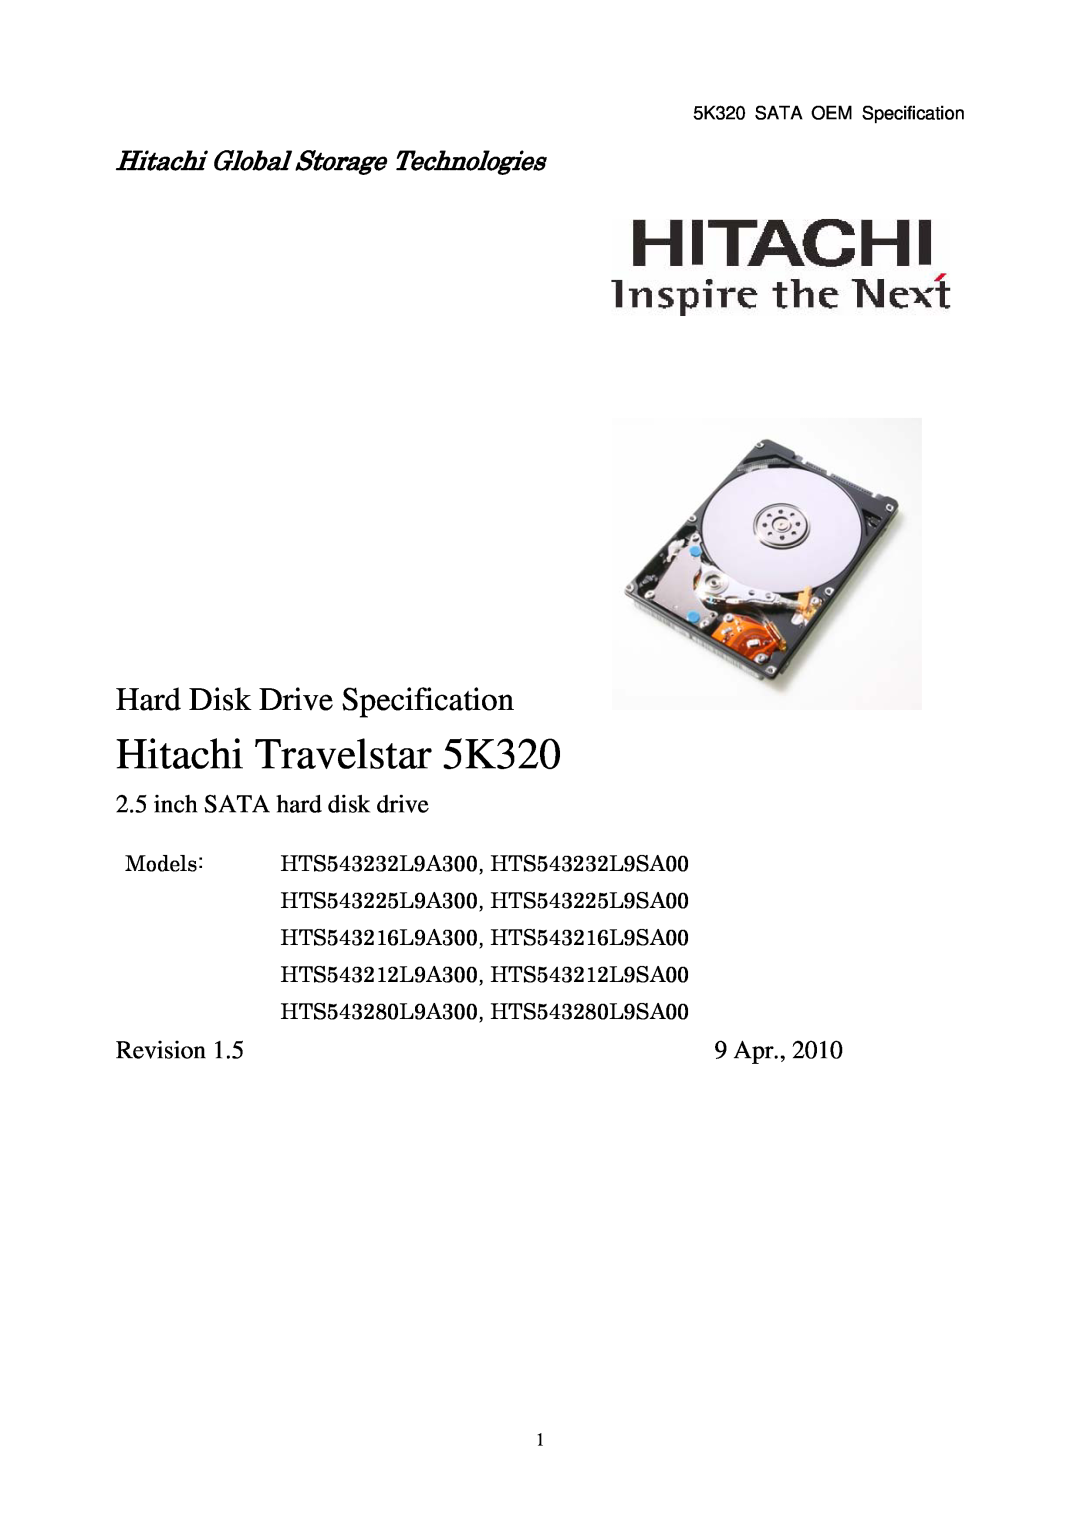 Hitachi HTS543280L9SA00 manual Hitachi Travelstar 5K320, Hard Disk Drive Specification, inch SATA hard disk drive, 9 Apr 